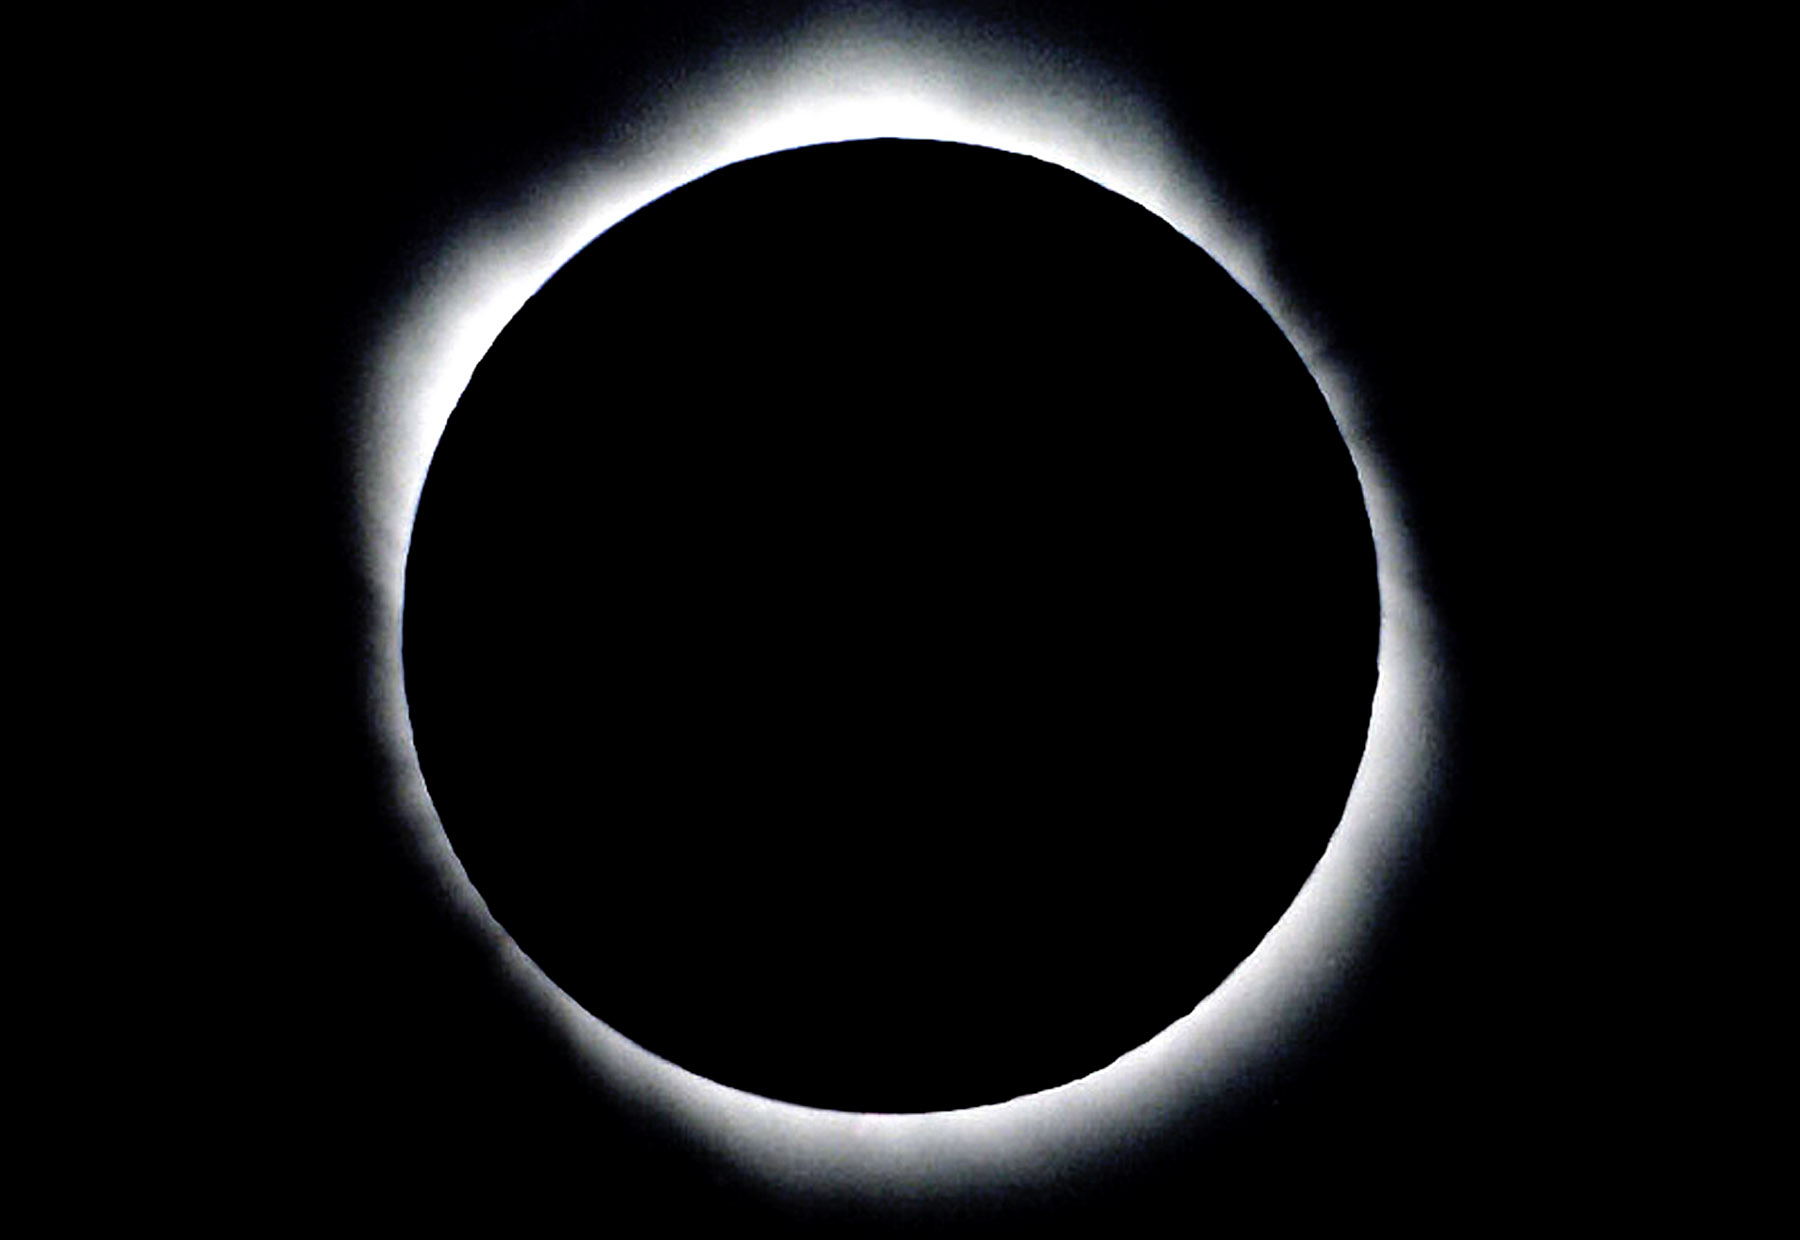 Eclipse 1998 - A58 - Corona - Wide